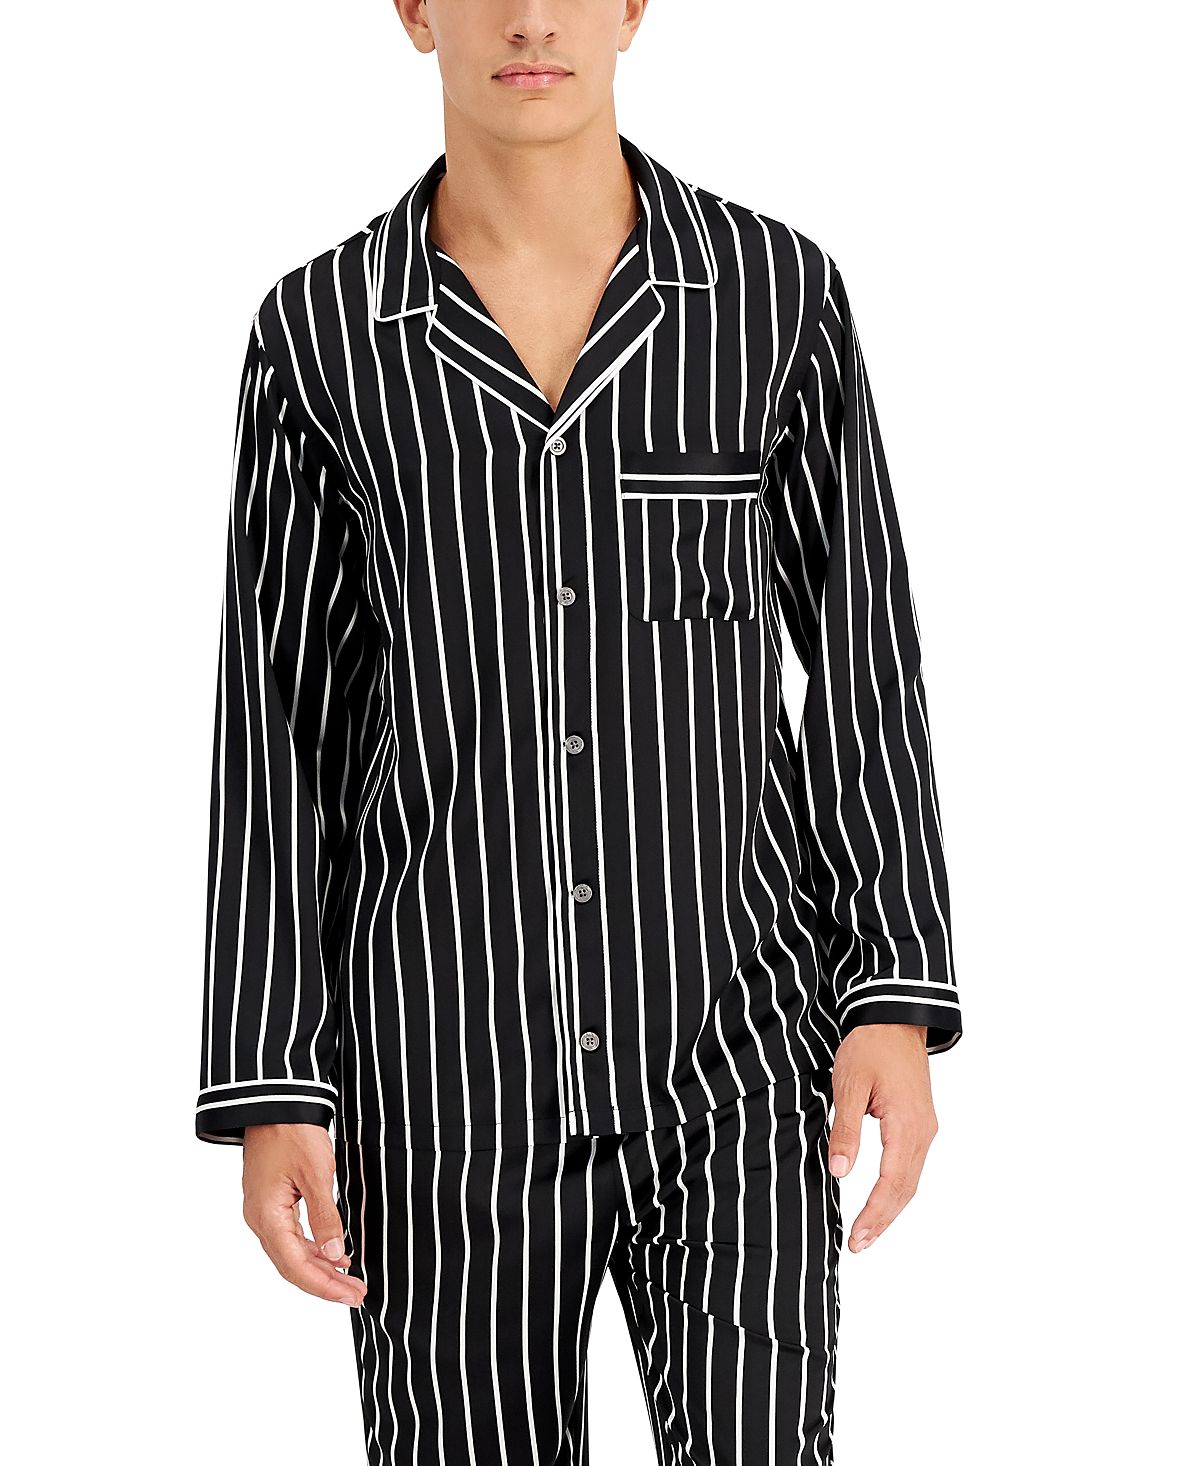 Inc International Concepts Stripe Satin Pajama Shirt Black and White Stripe